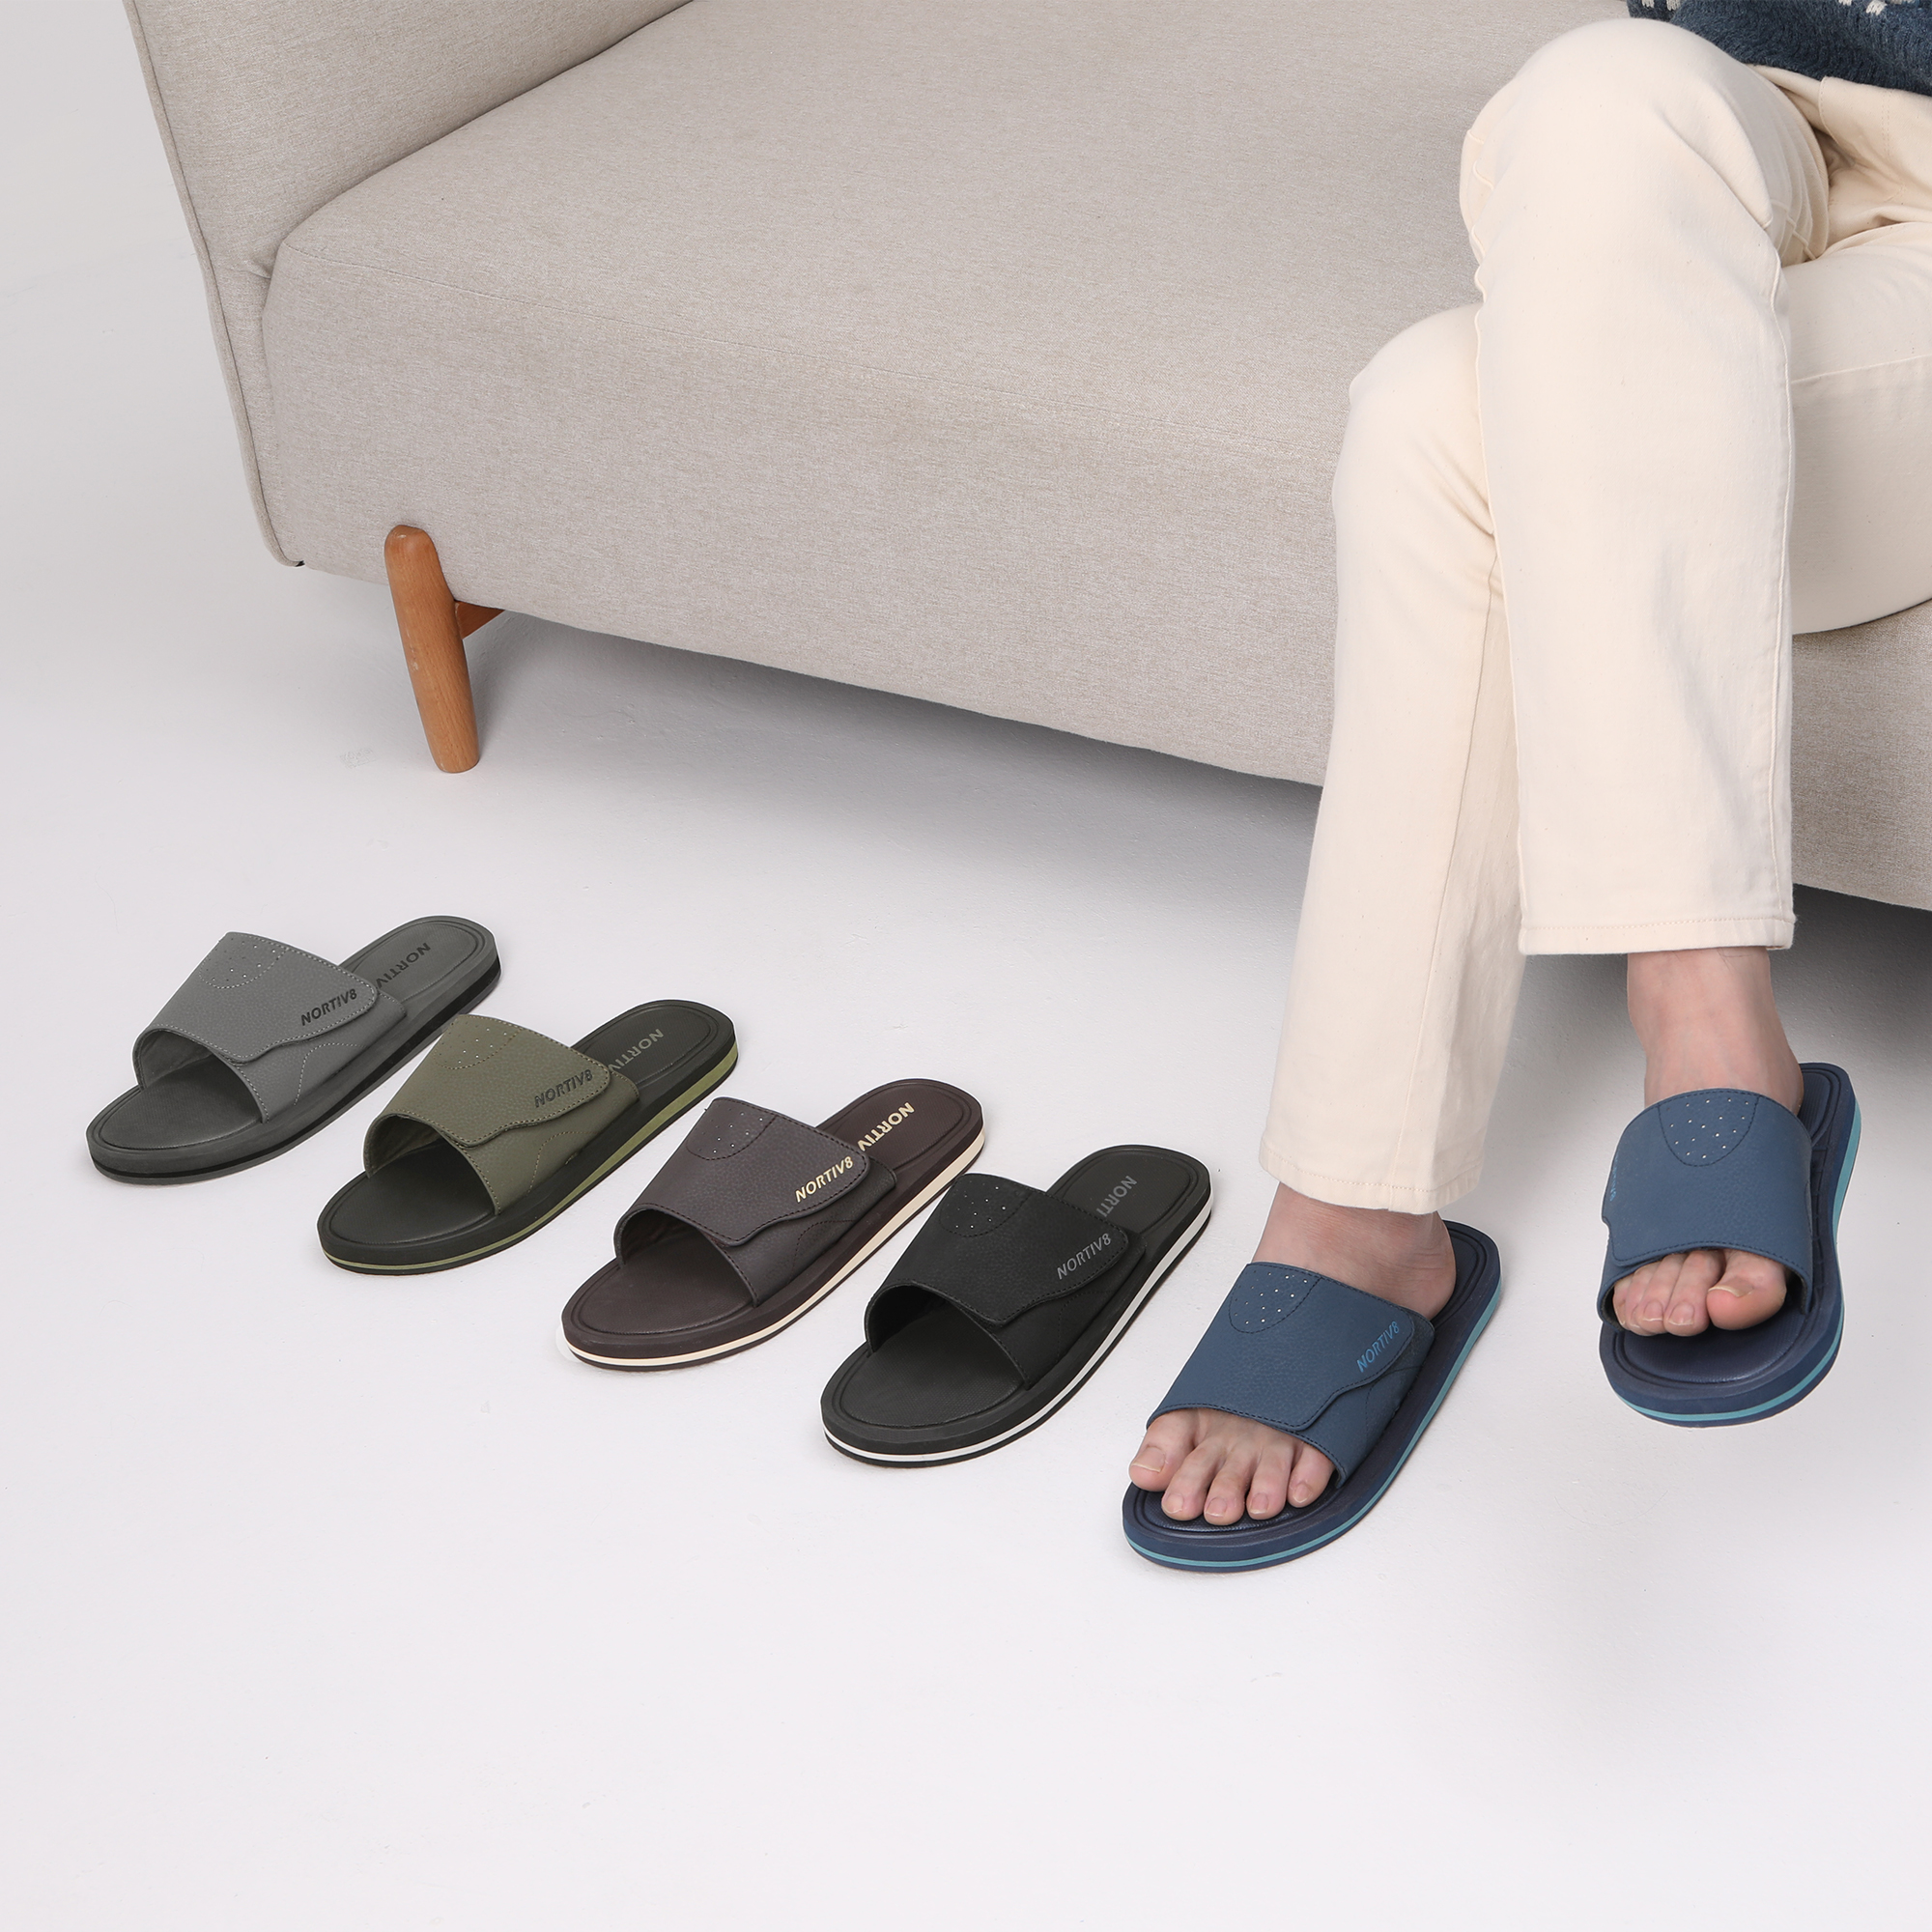 Nortiv8 Men's Memory Foam Adjustable Slide Sandals Comfort Lightweight Summer Beach Sandals Shoes FUSION GREY Size 15 - image 4 of 5